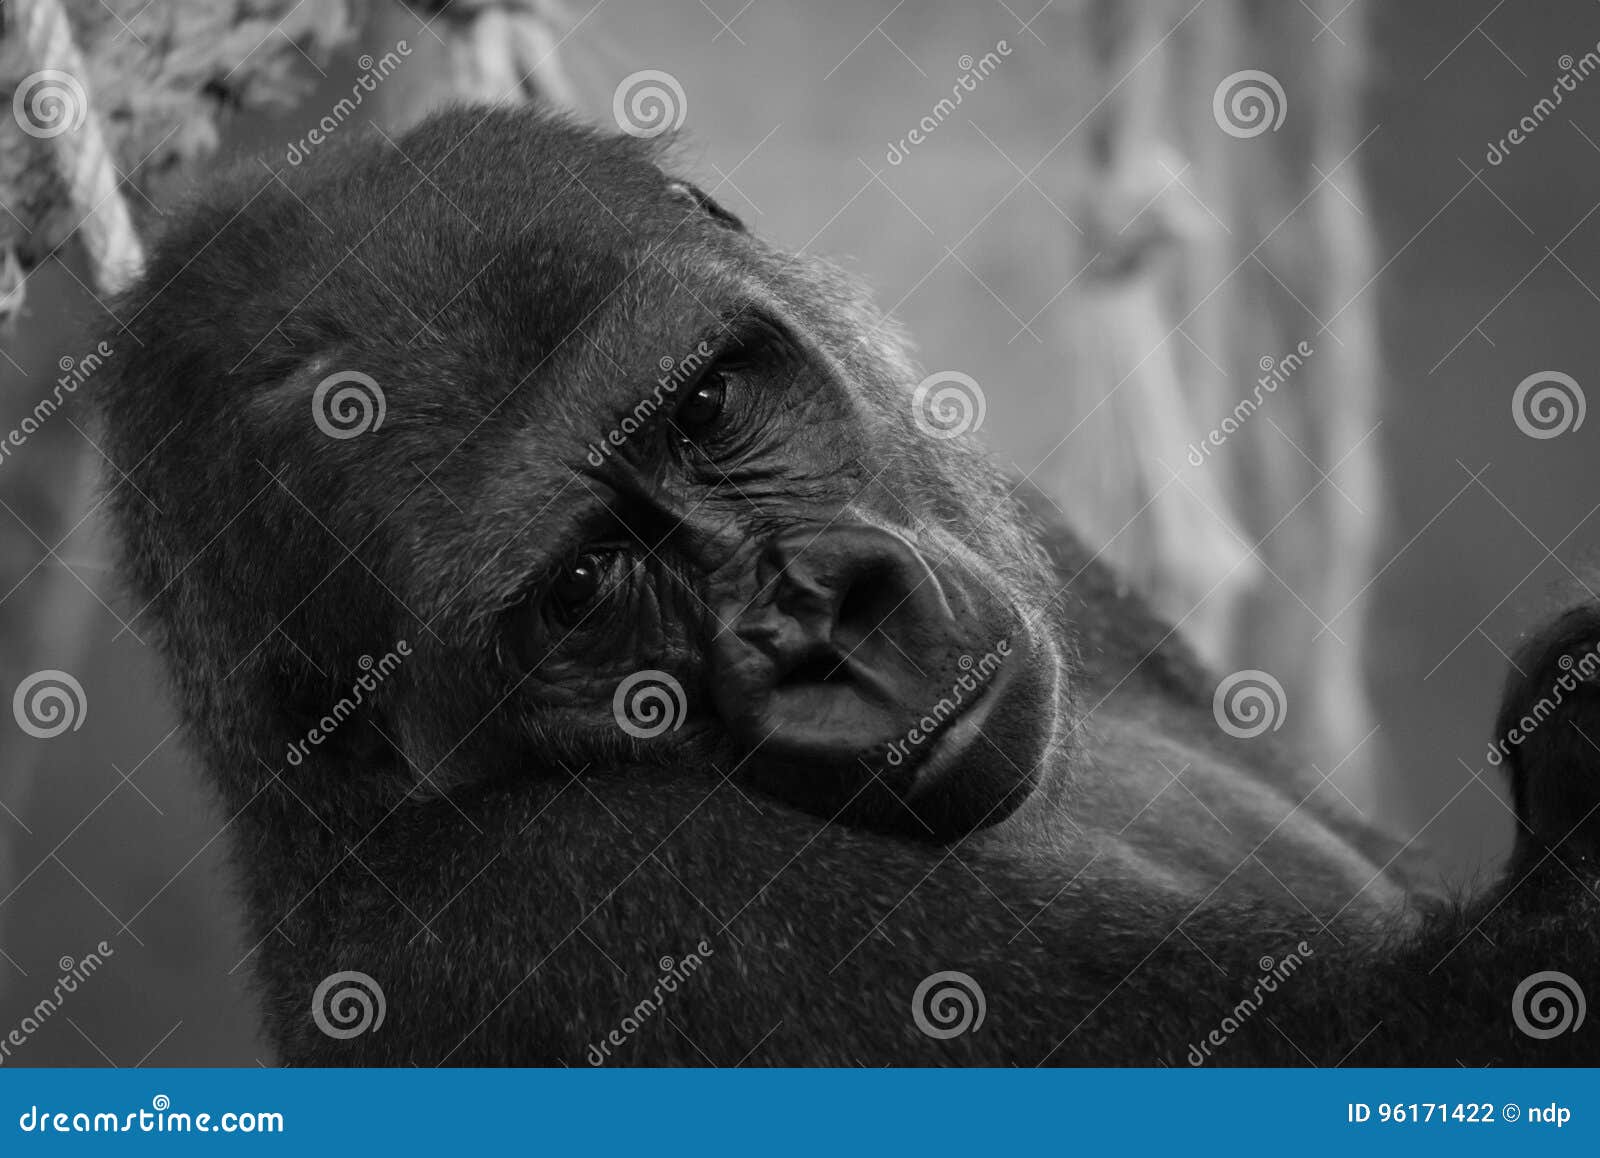 mono close-up of gorilla head in hammock